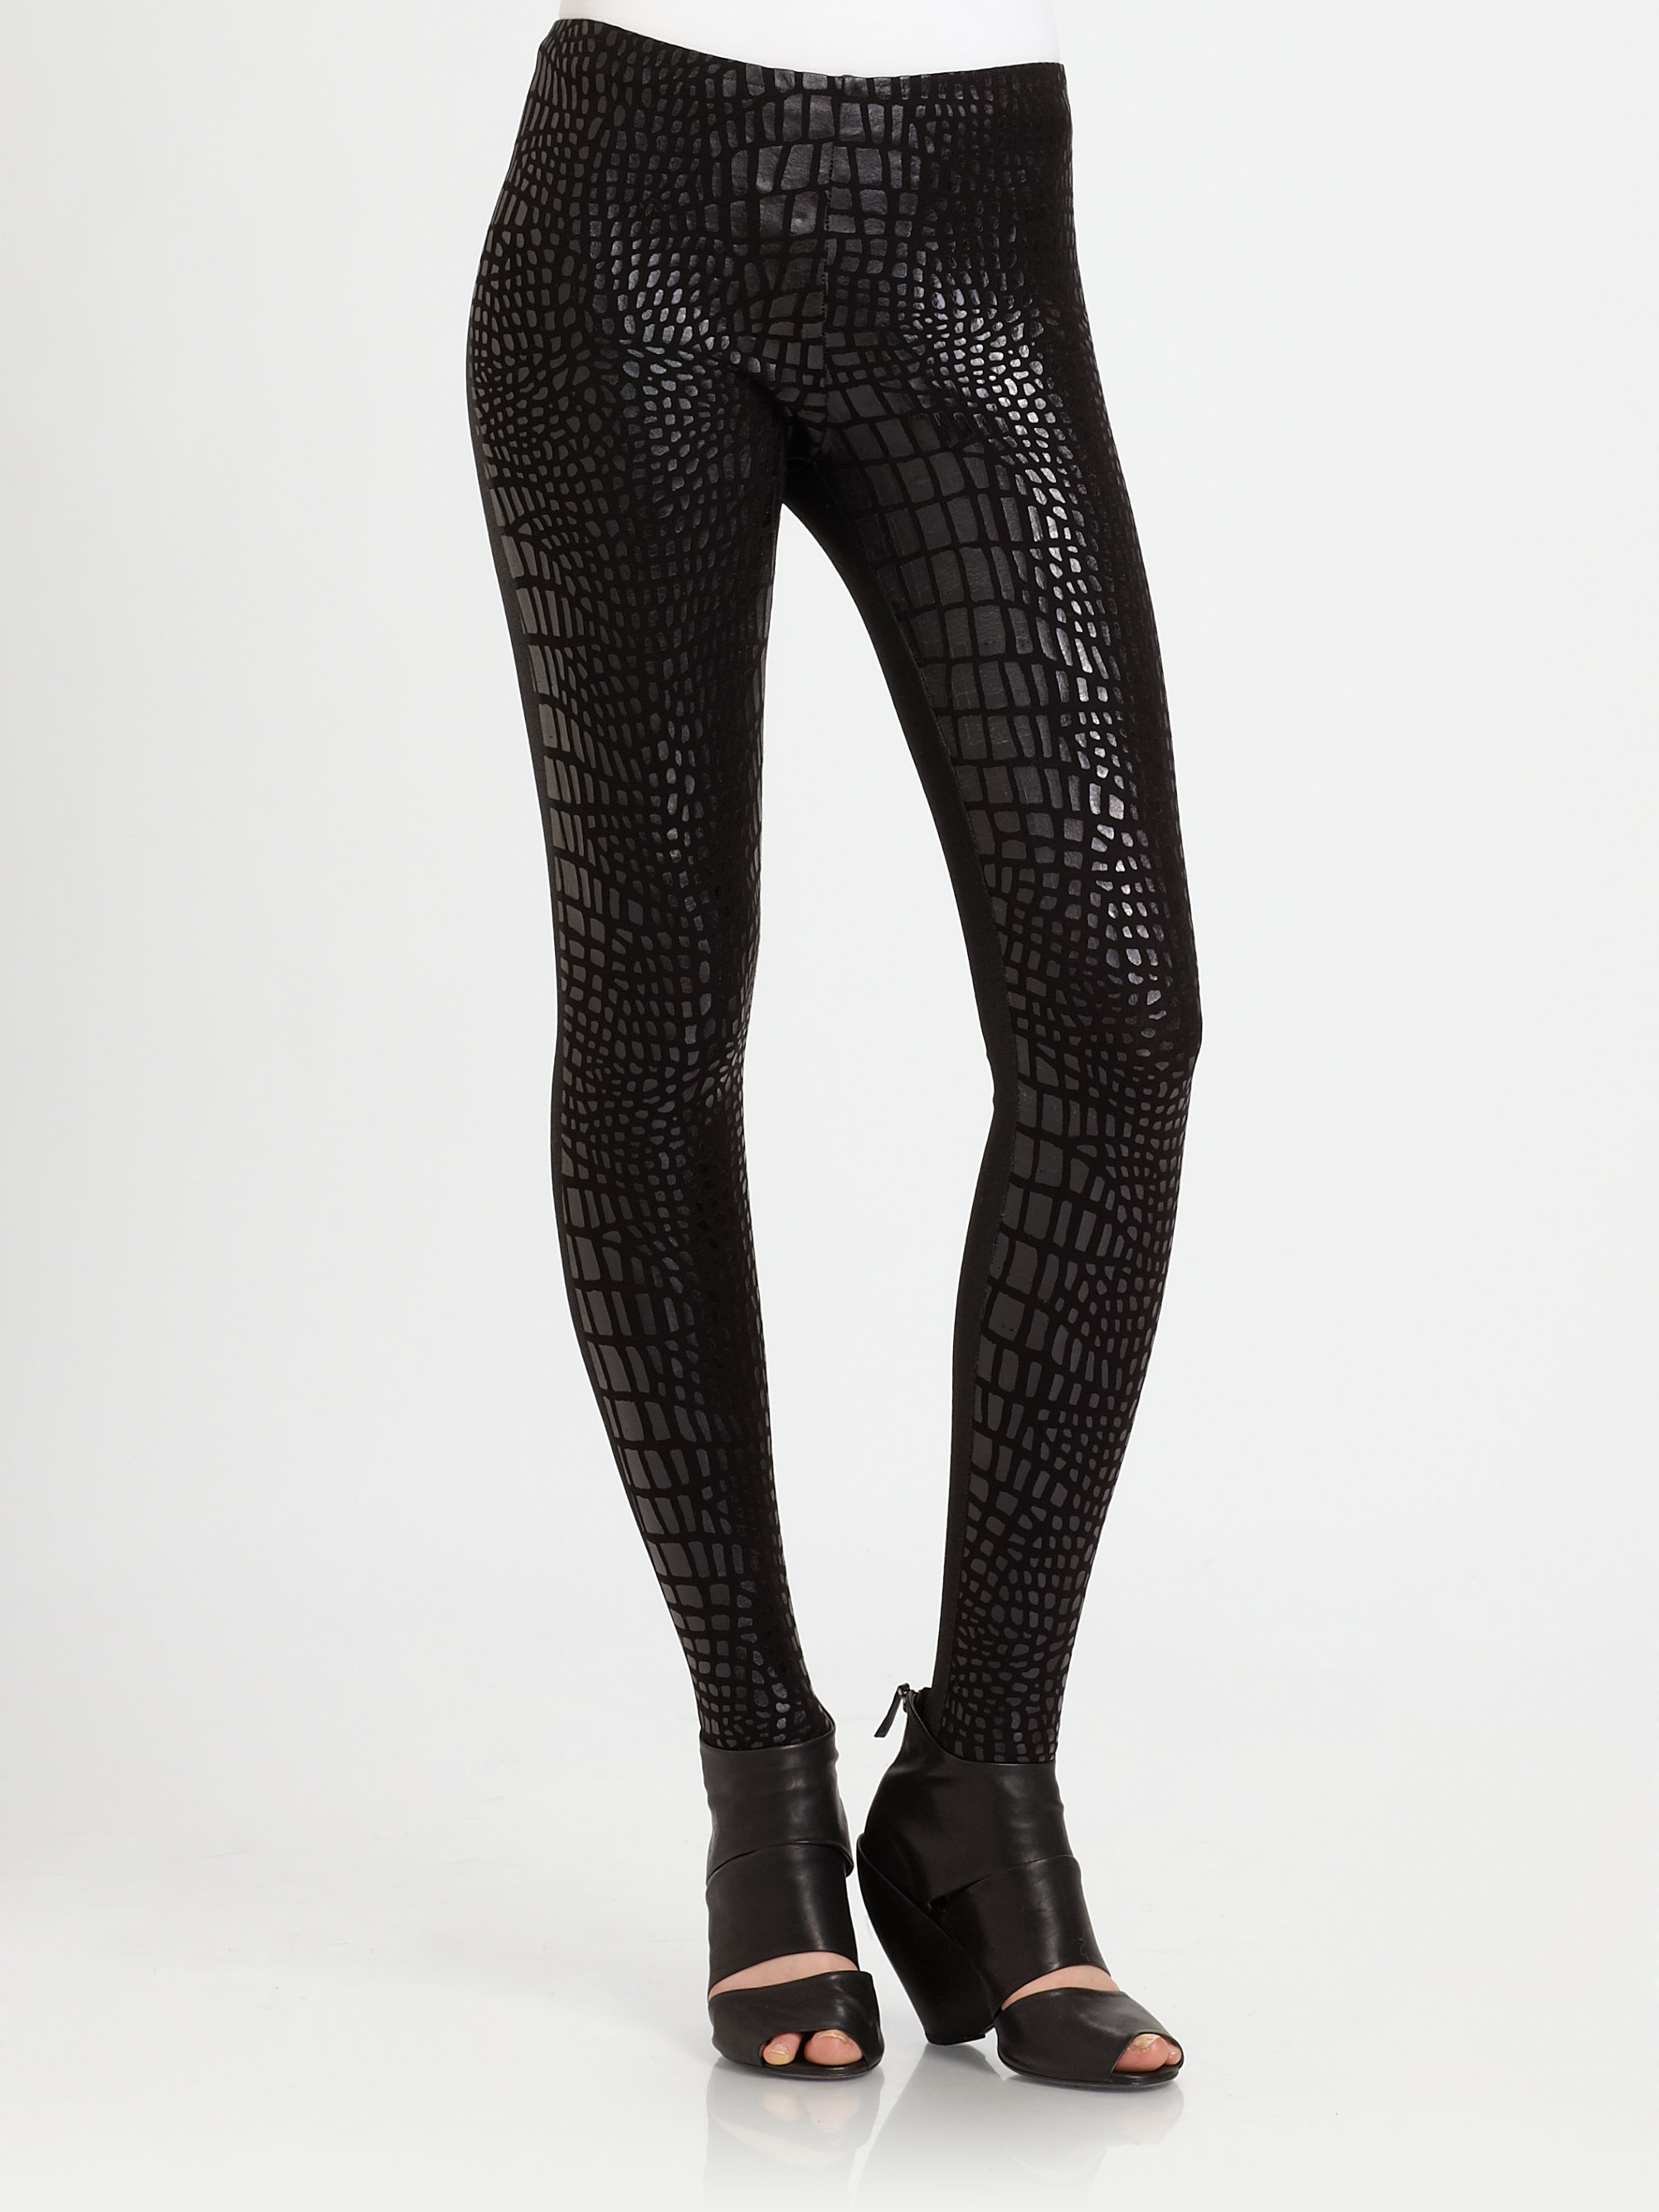 Aiko Croc-Print Leggings in Black | Lyst